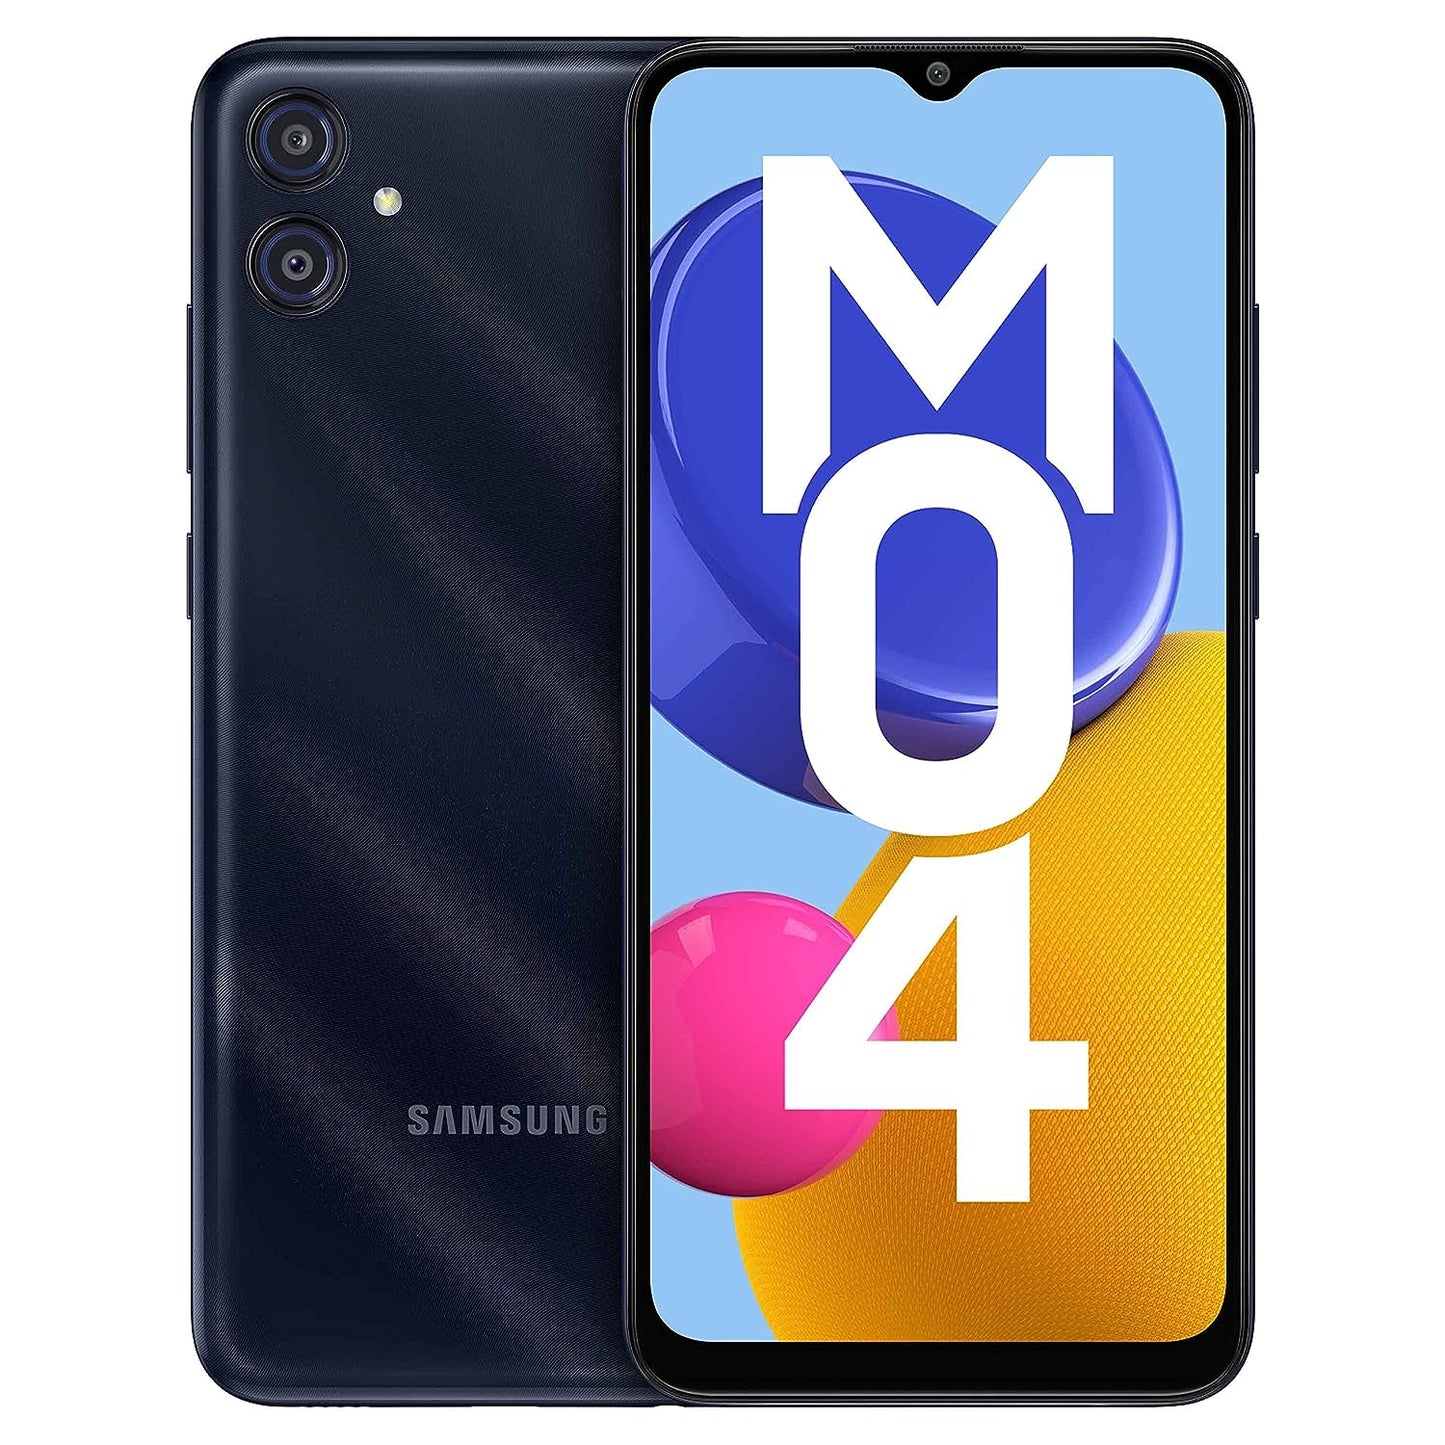 Samsung Galaxy M04 (Dark Blue, 64GB) (4GB RAM)